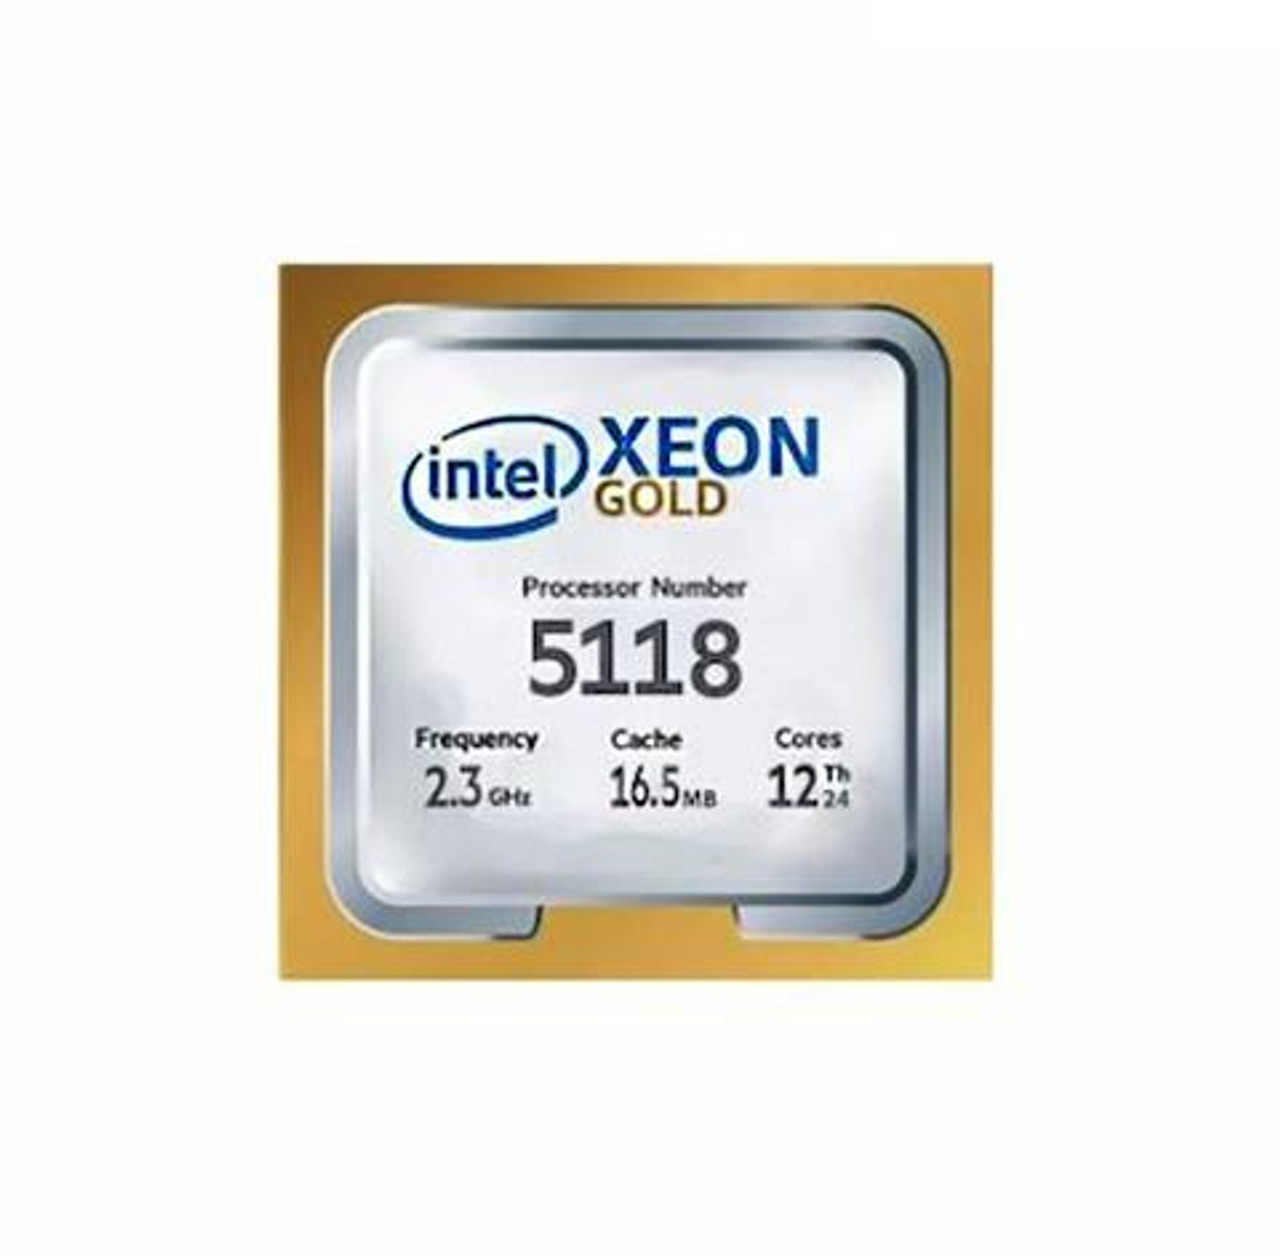 Dell CPU Kit Intel Xeon Gold 12 Core Processor 5118 2.30GHz 16.5mb L3 Cache Tdp 105w Fclga3647 For Dell Precision 7820 Tower Workstation ( T7820 ) (